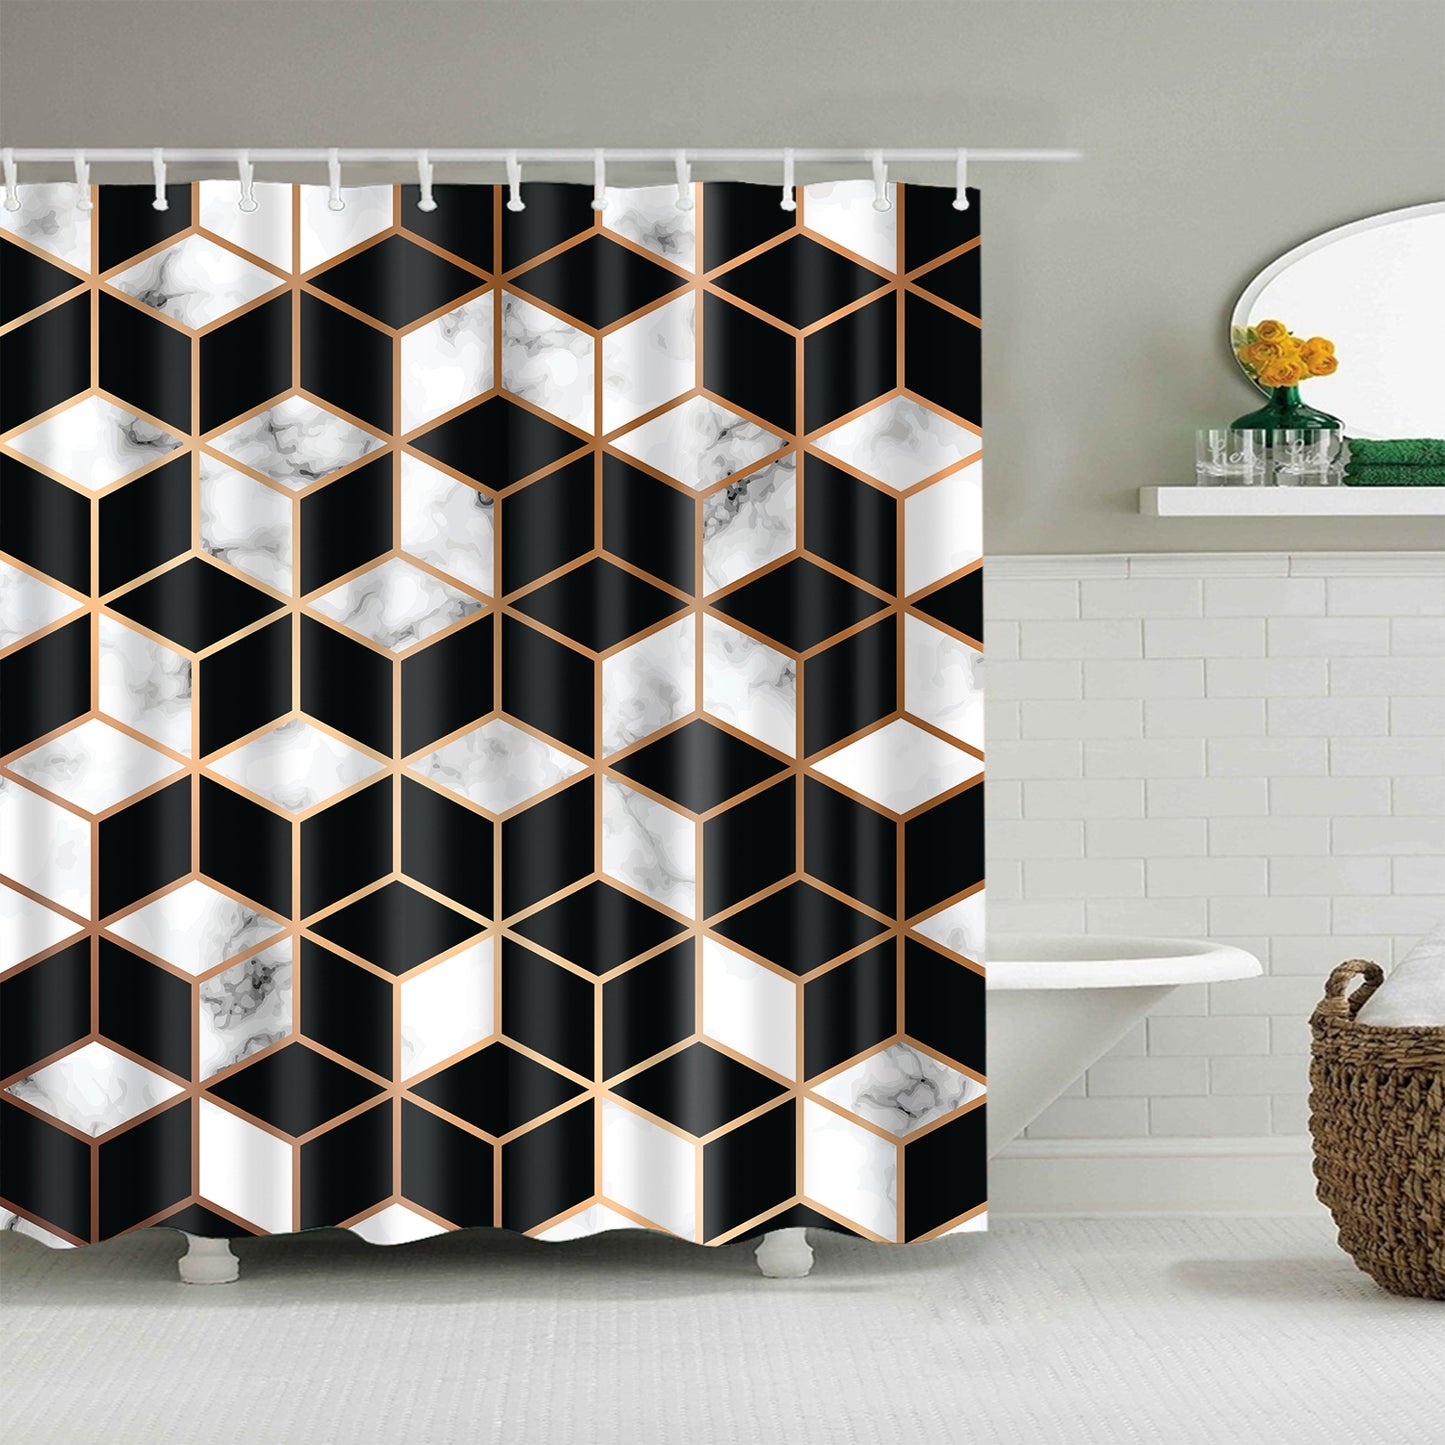 3D Cube Effect Black White Marbling Mosaic Tiles Shower Curtain